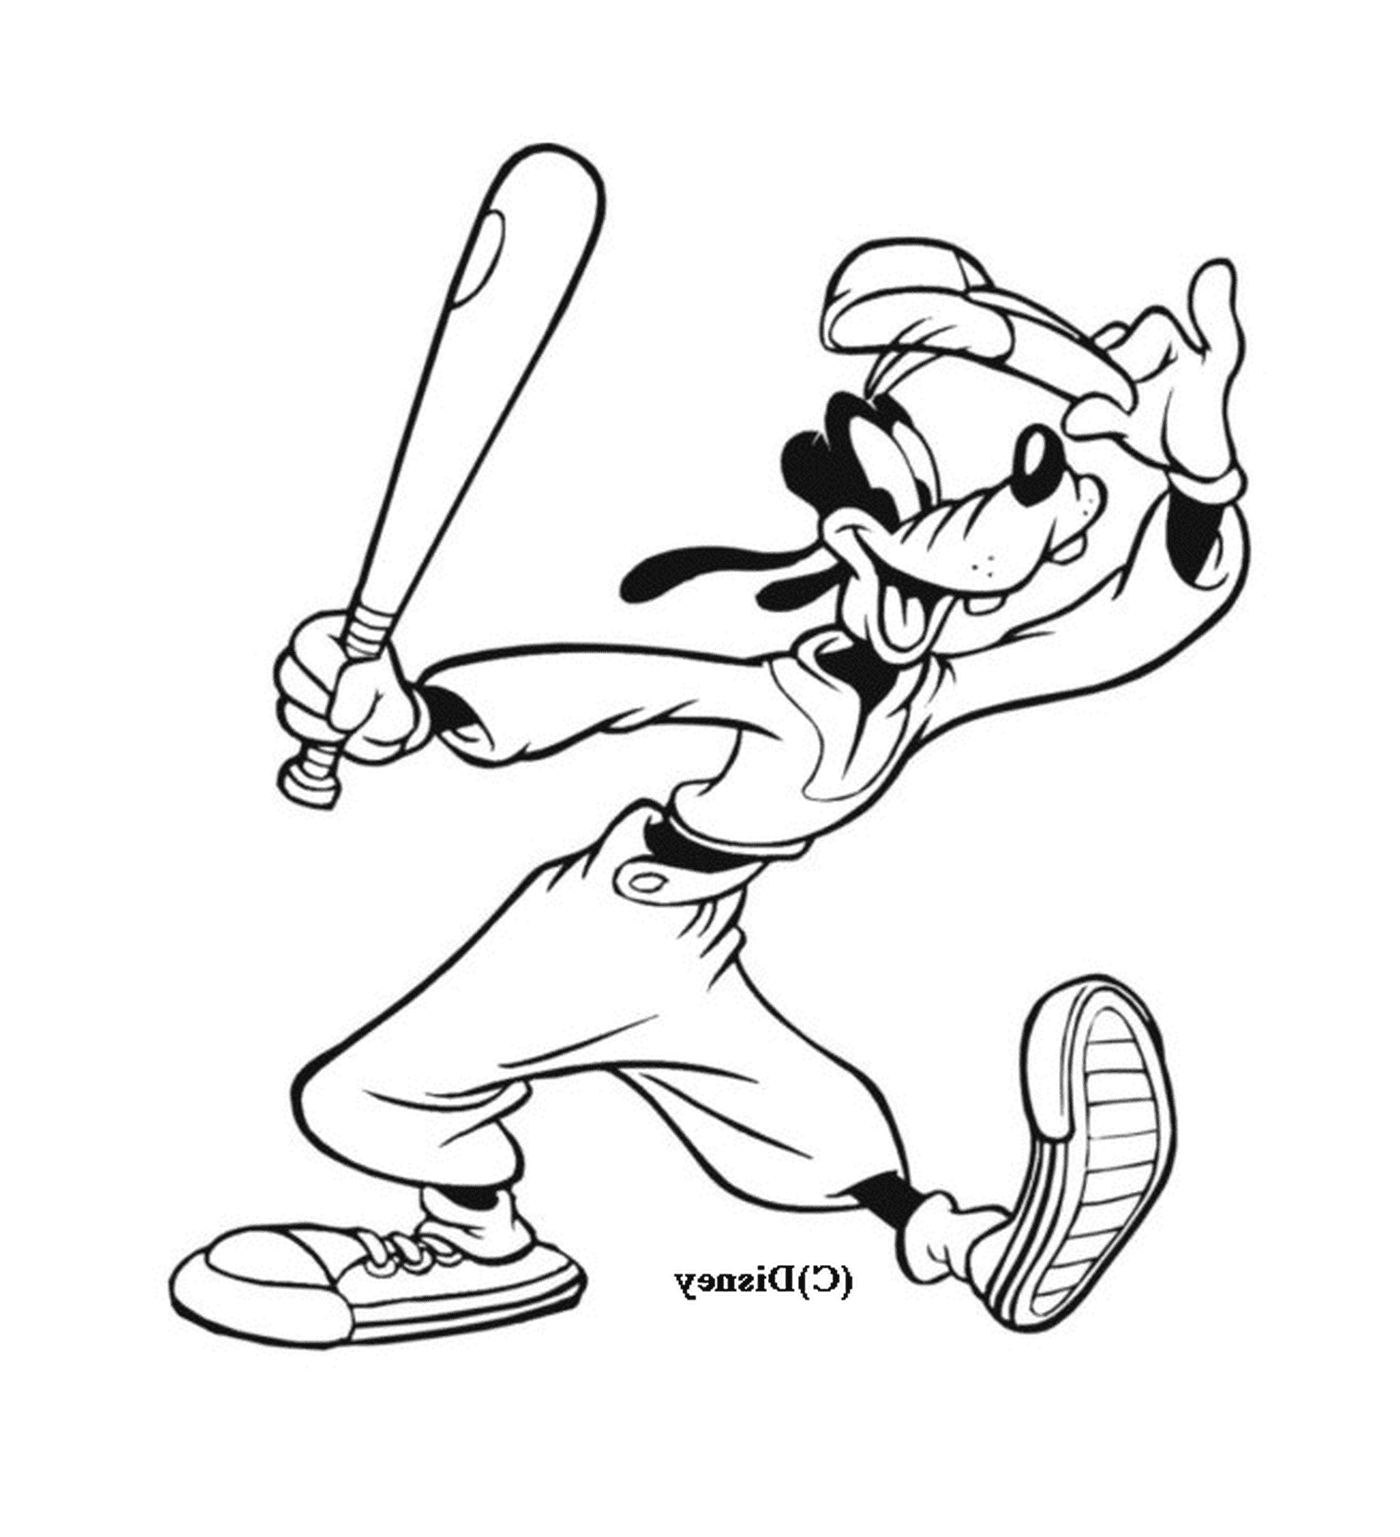  Dingo juega béisbol con un bate 